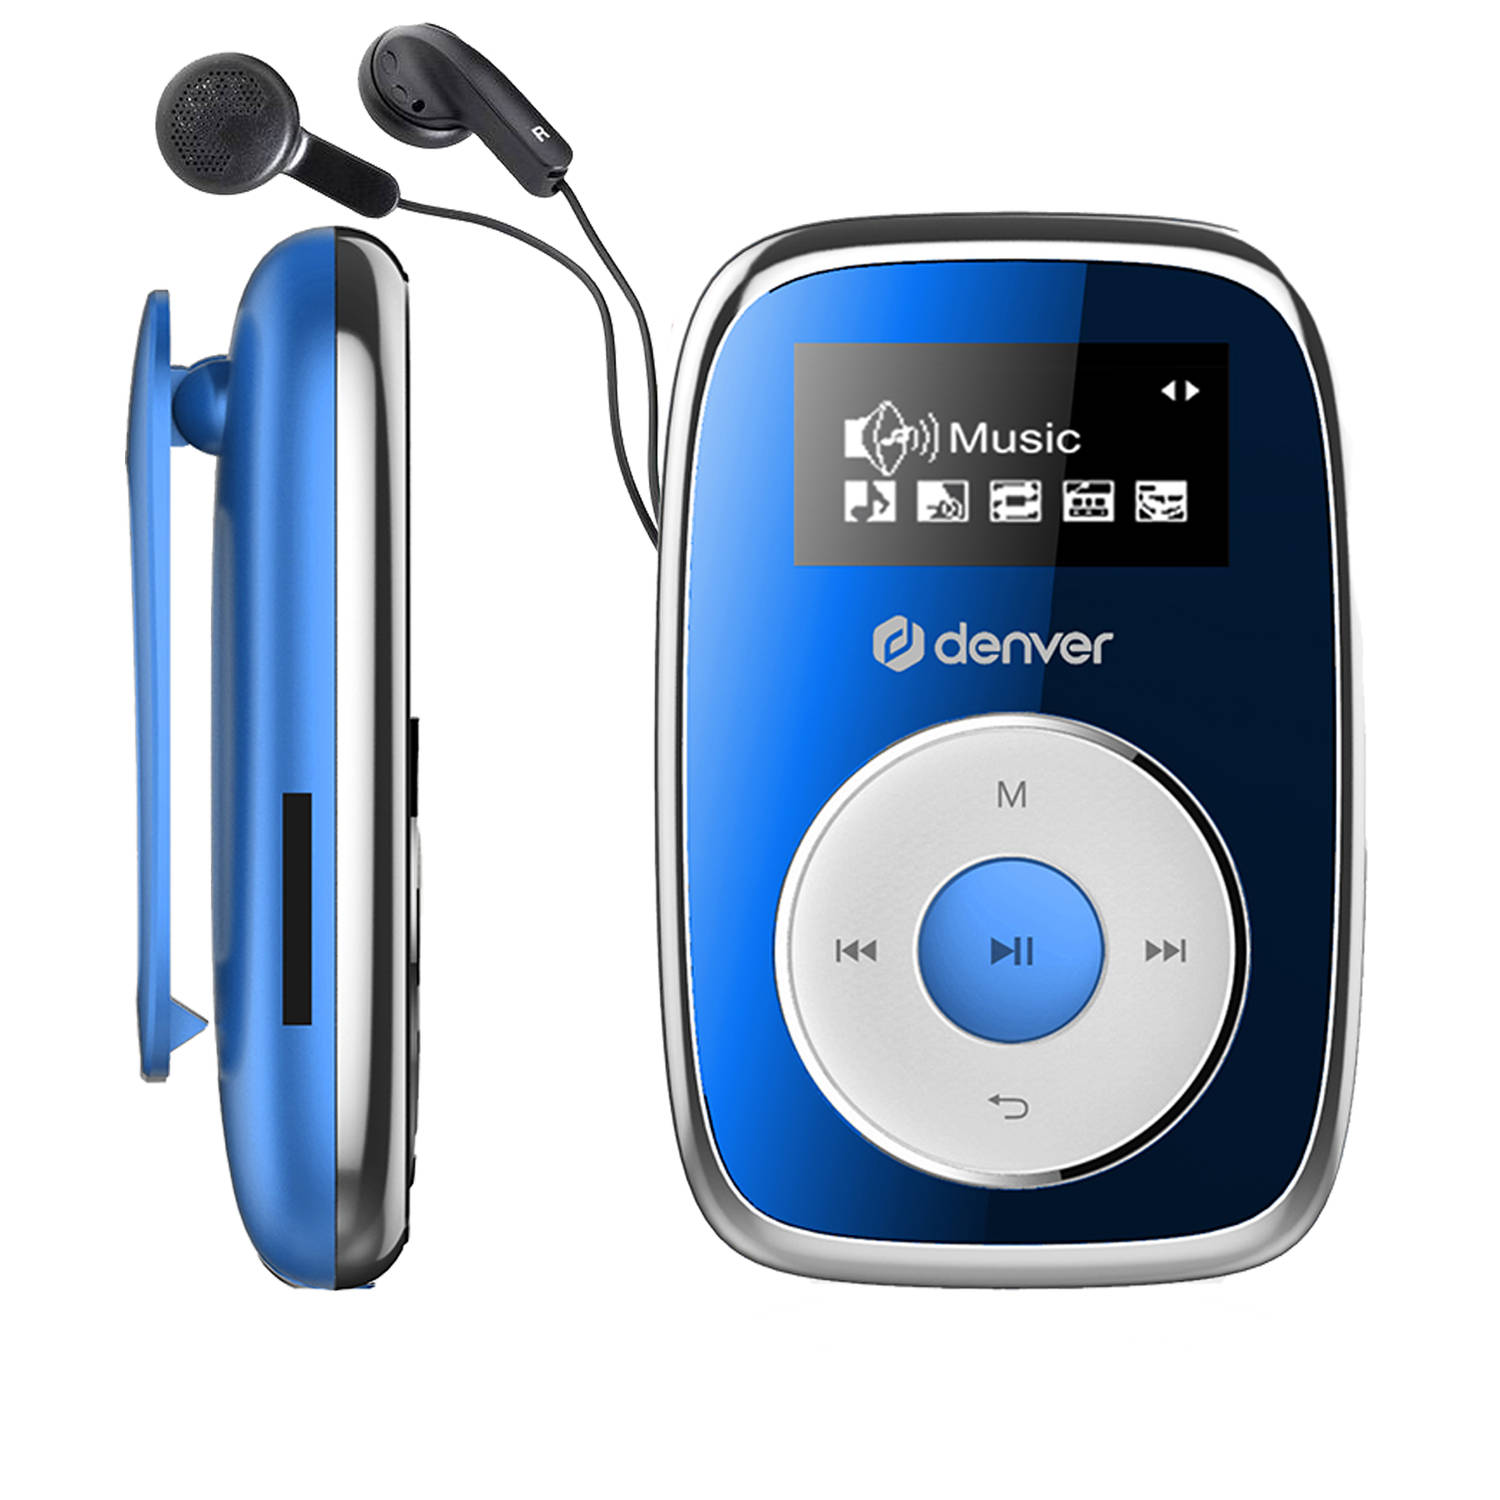 Denver MP3 Speler Incl. Oordopjes - 32GB - Shuffle modus - Kinderen & Volwassenen - Bevestigingsclip - AUX - MicroSD - MPS316 - Blauw